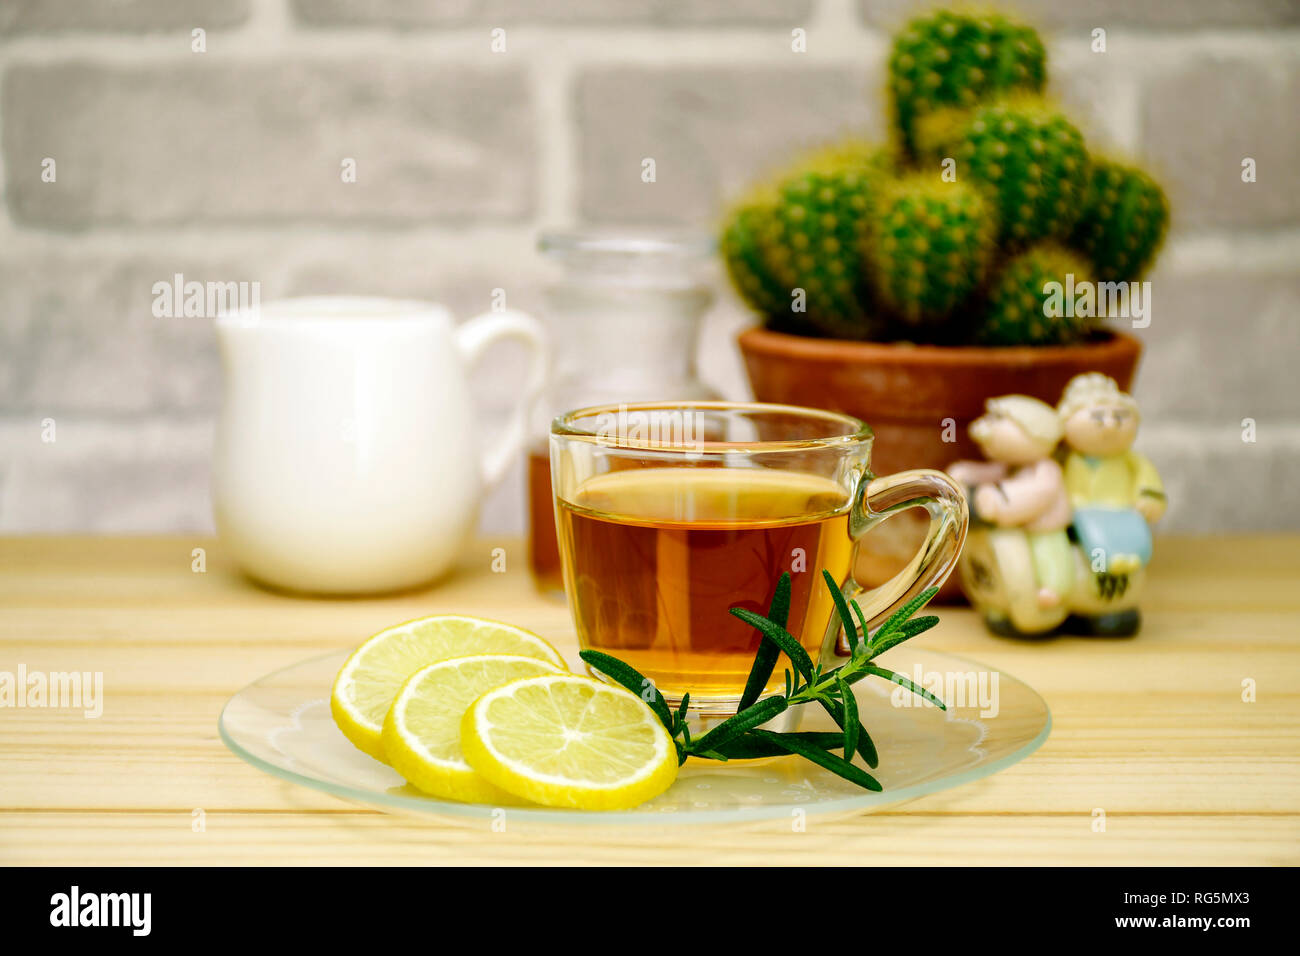 Red tea and lemon slice on pine wood table. Stock Photo